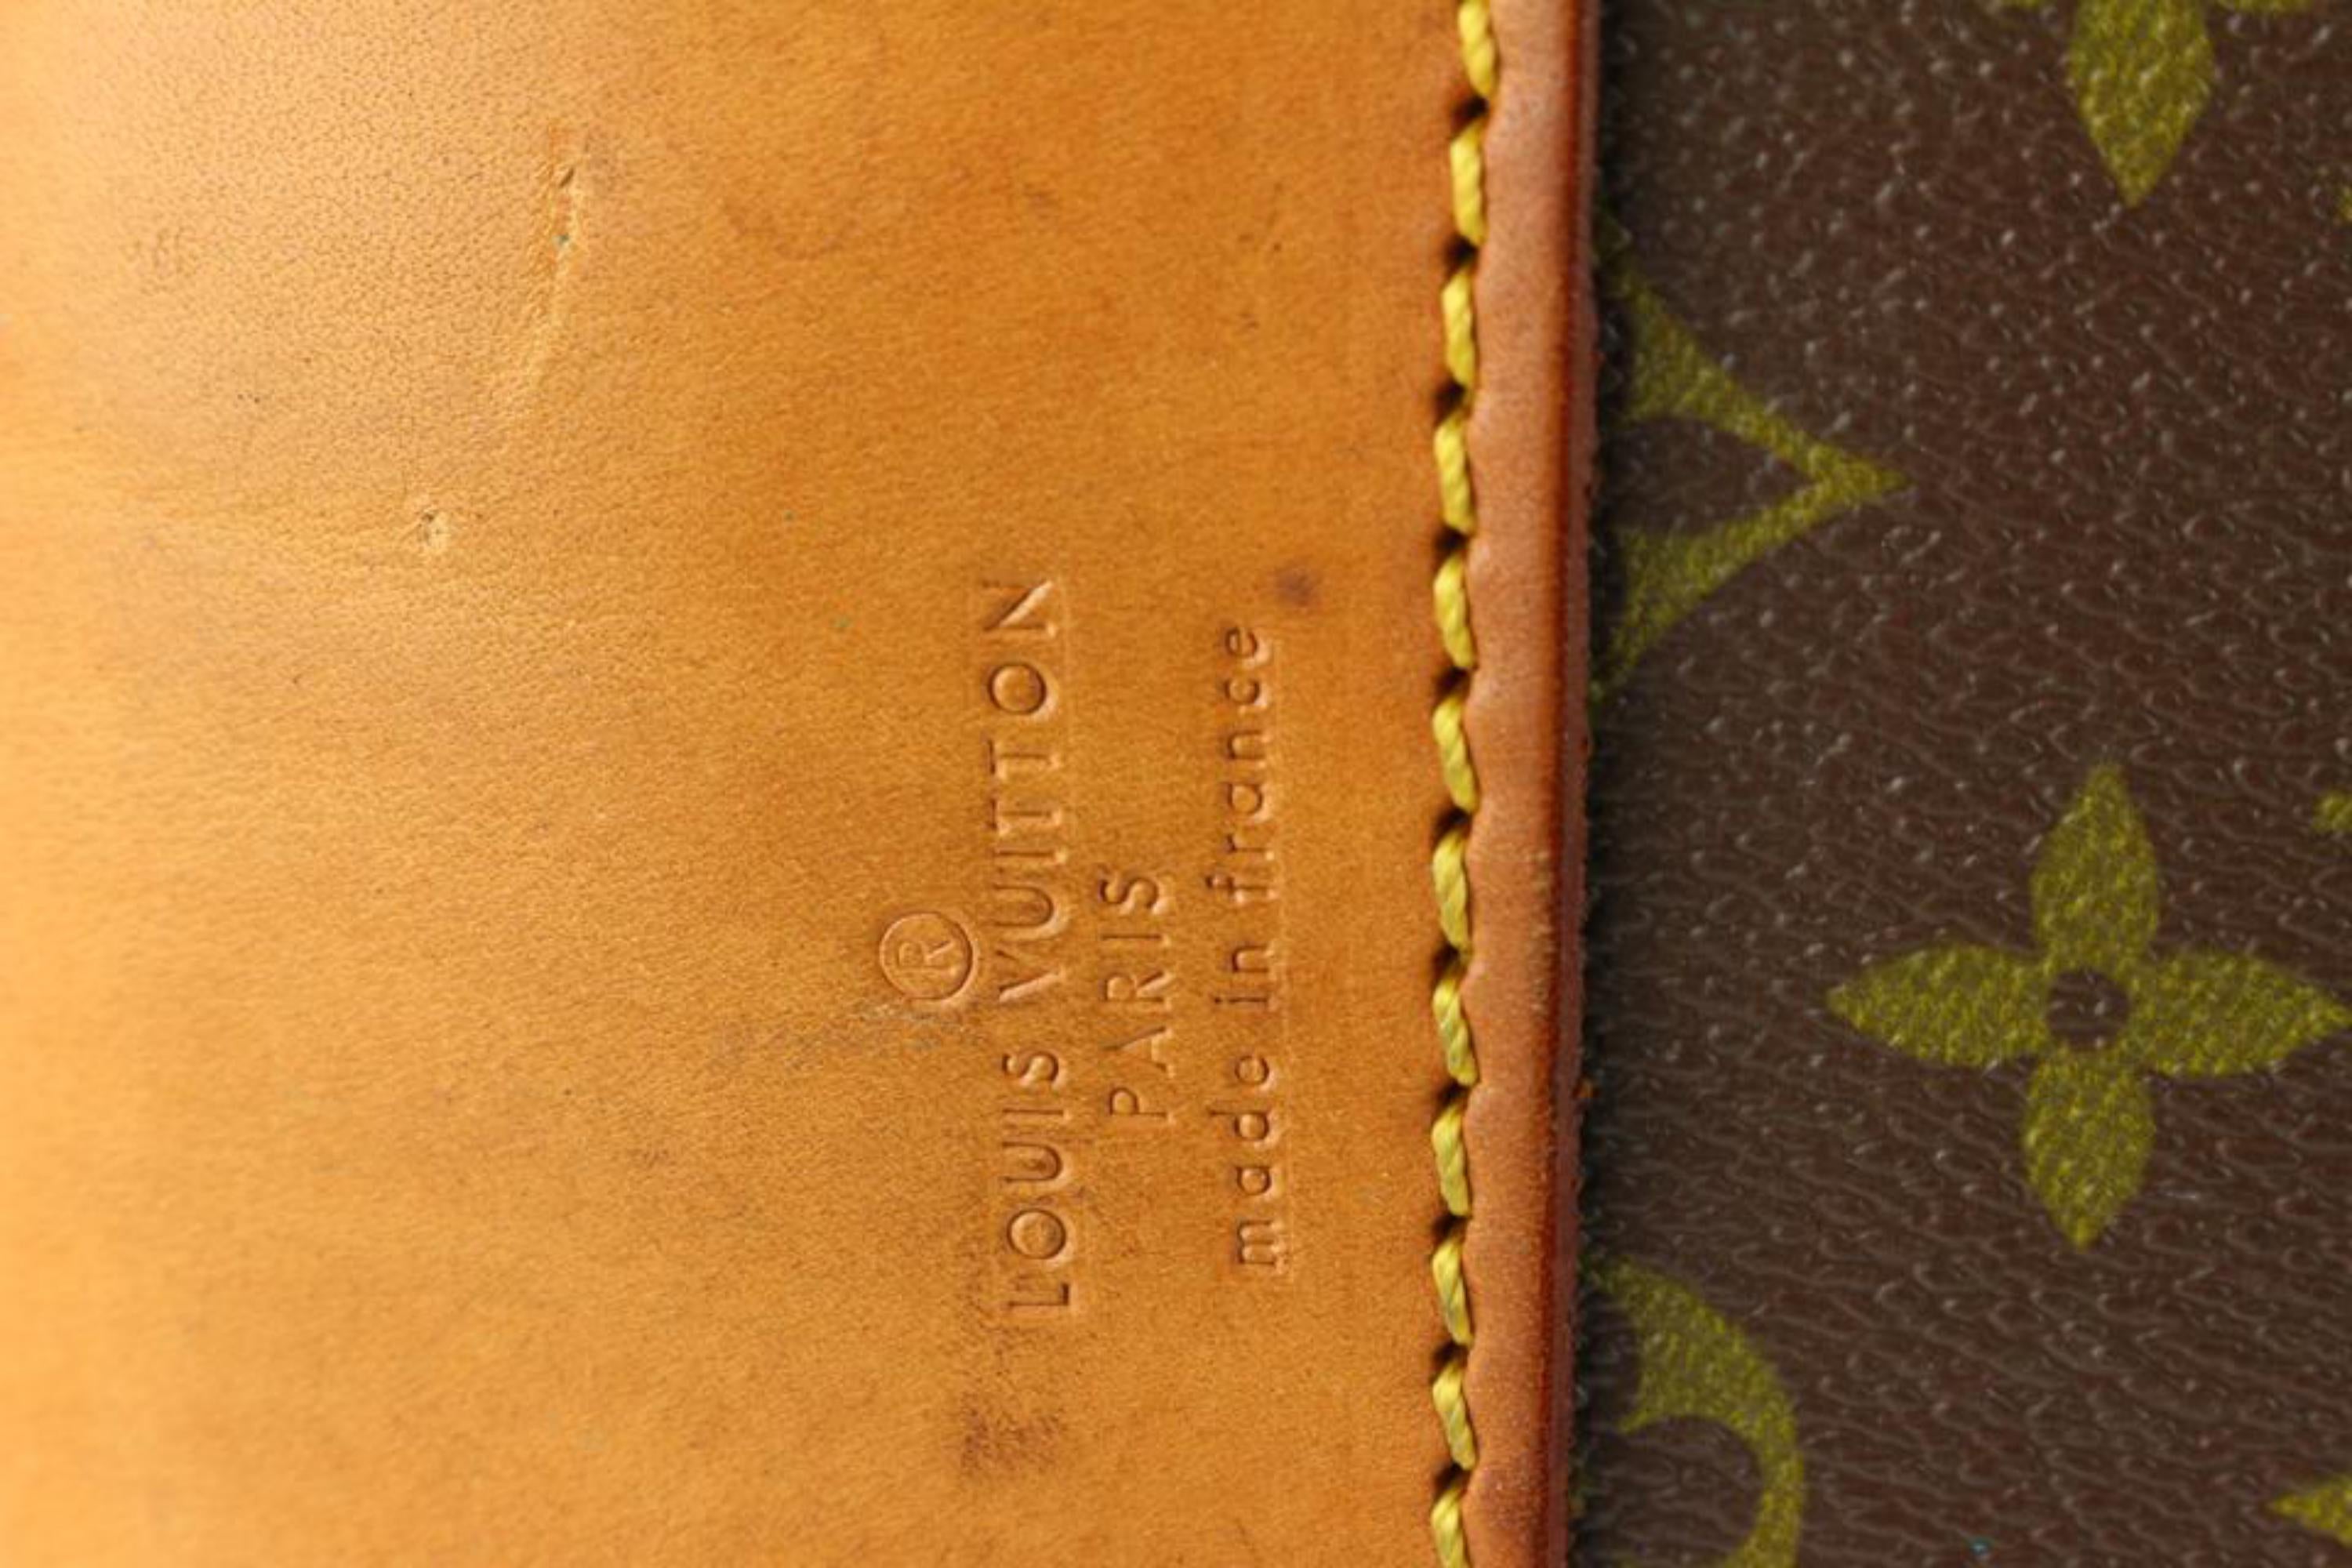 Louis Vuitton Paris France Luggage Tag Worn Brown Leather LV